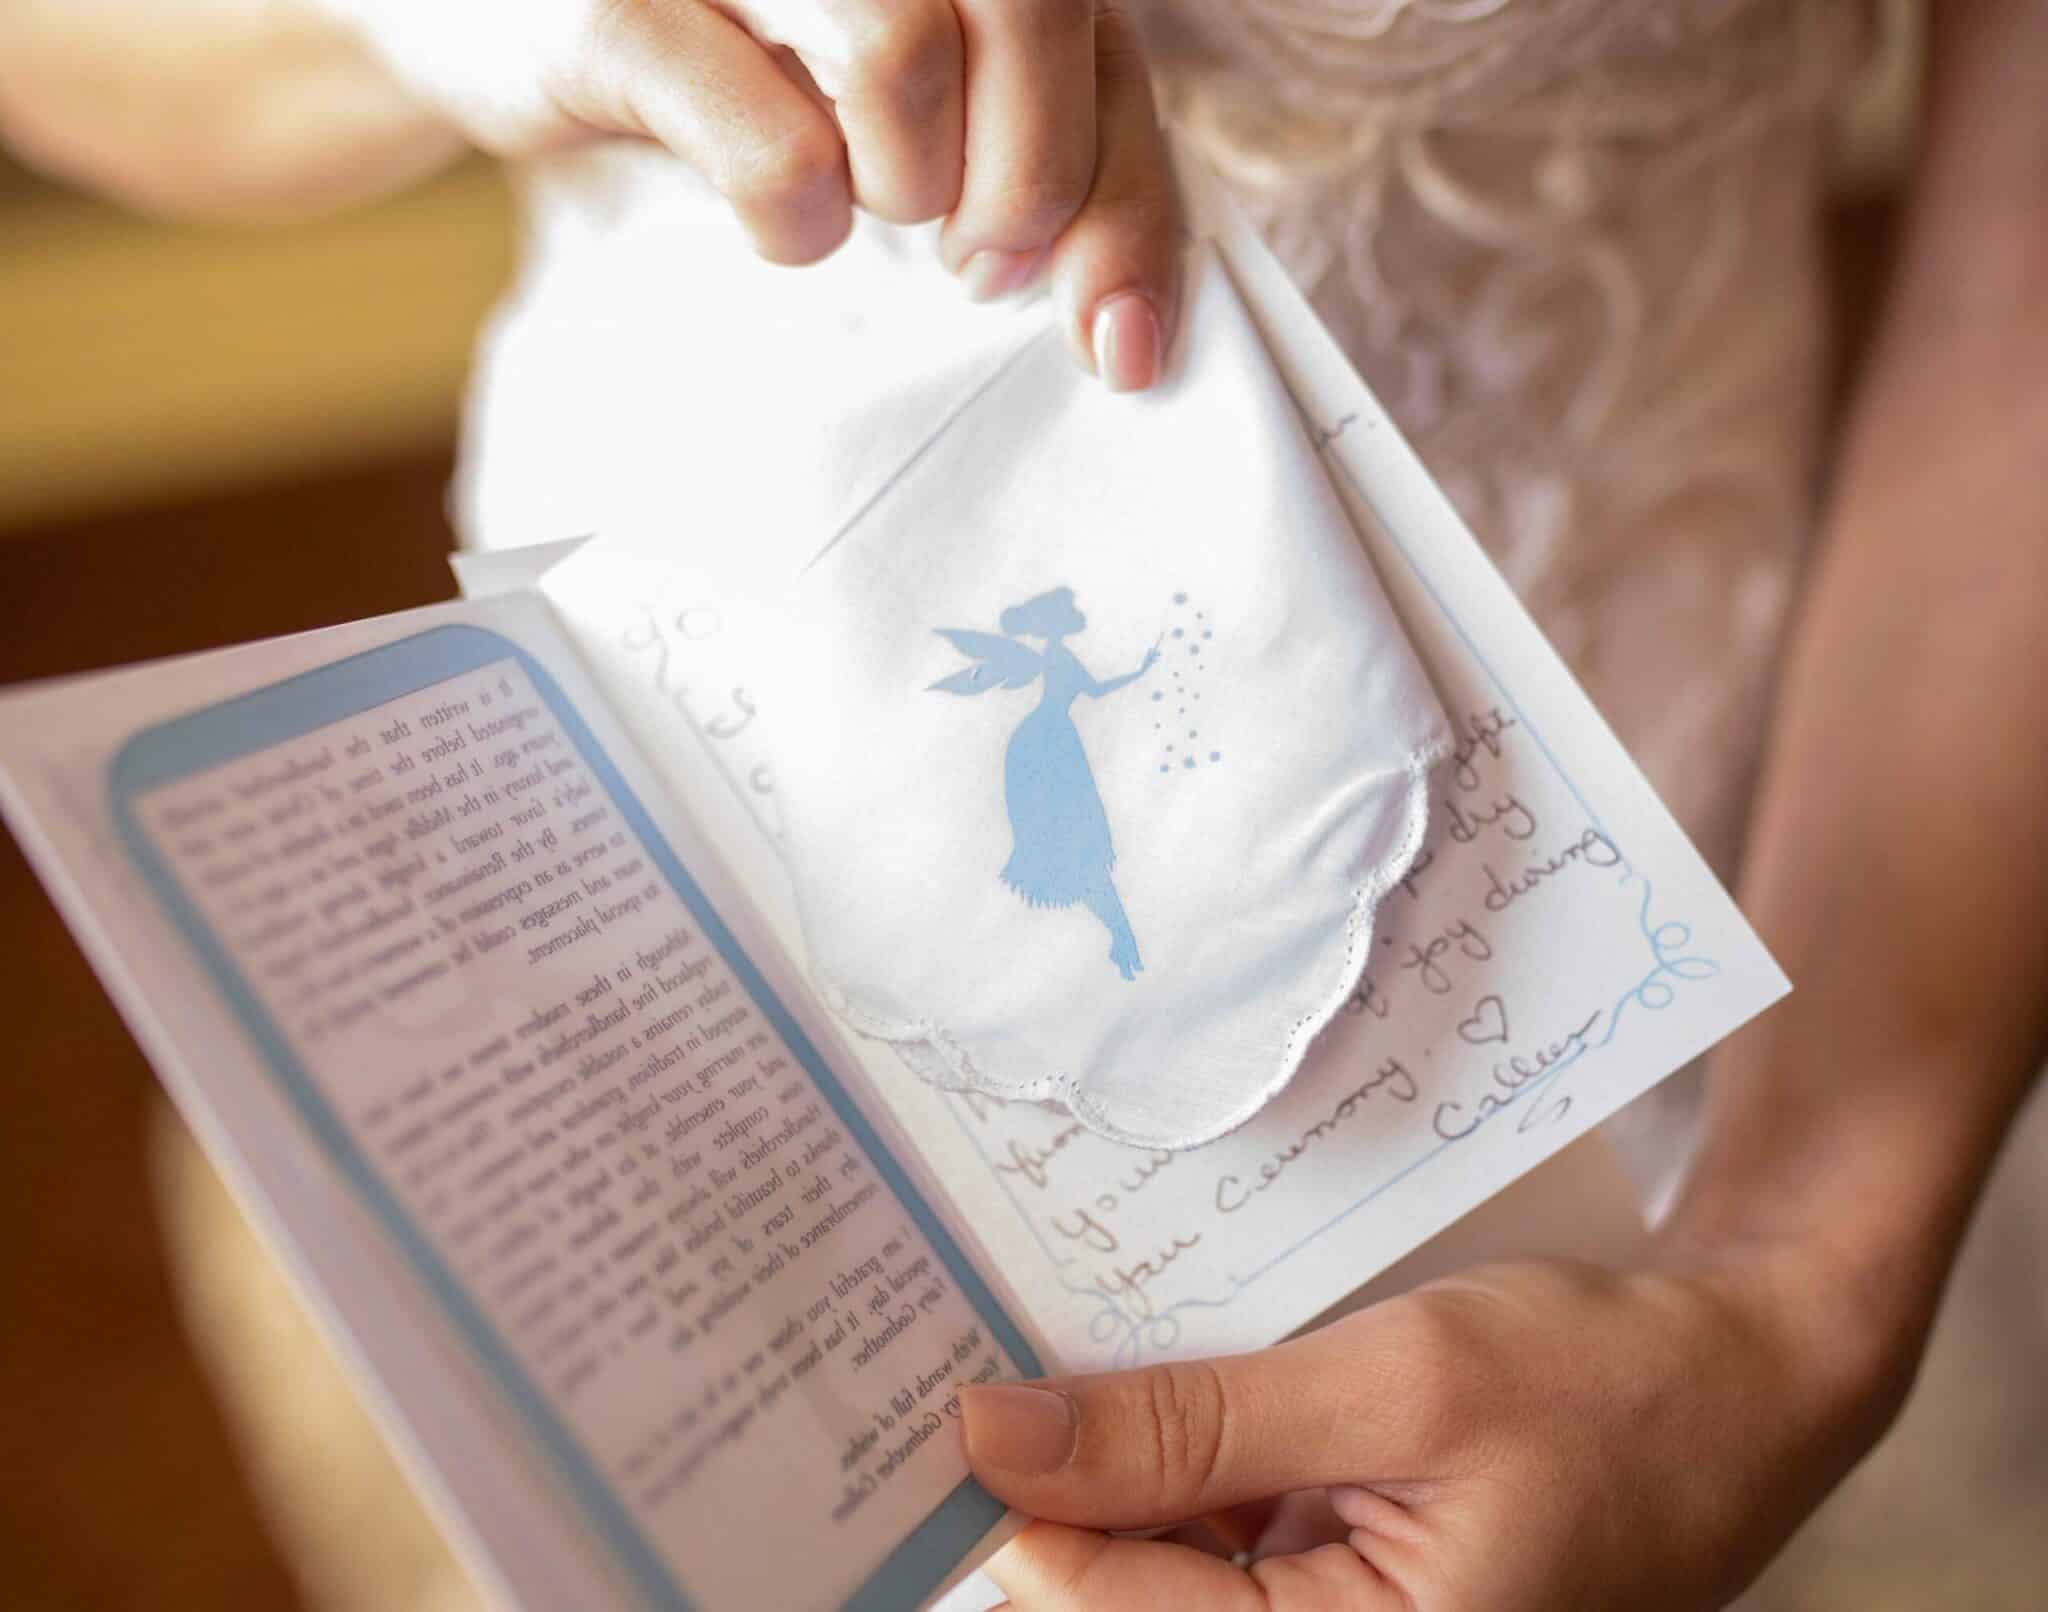 Wedding Traditions – The Handkerchief